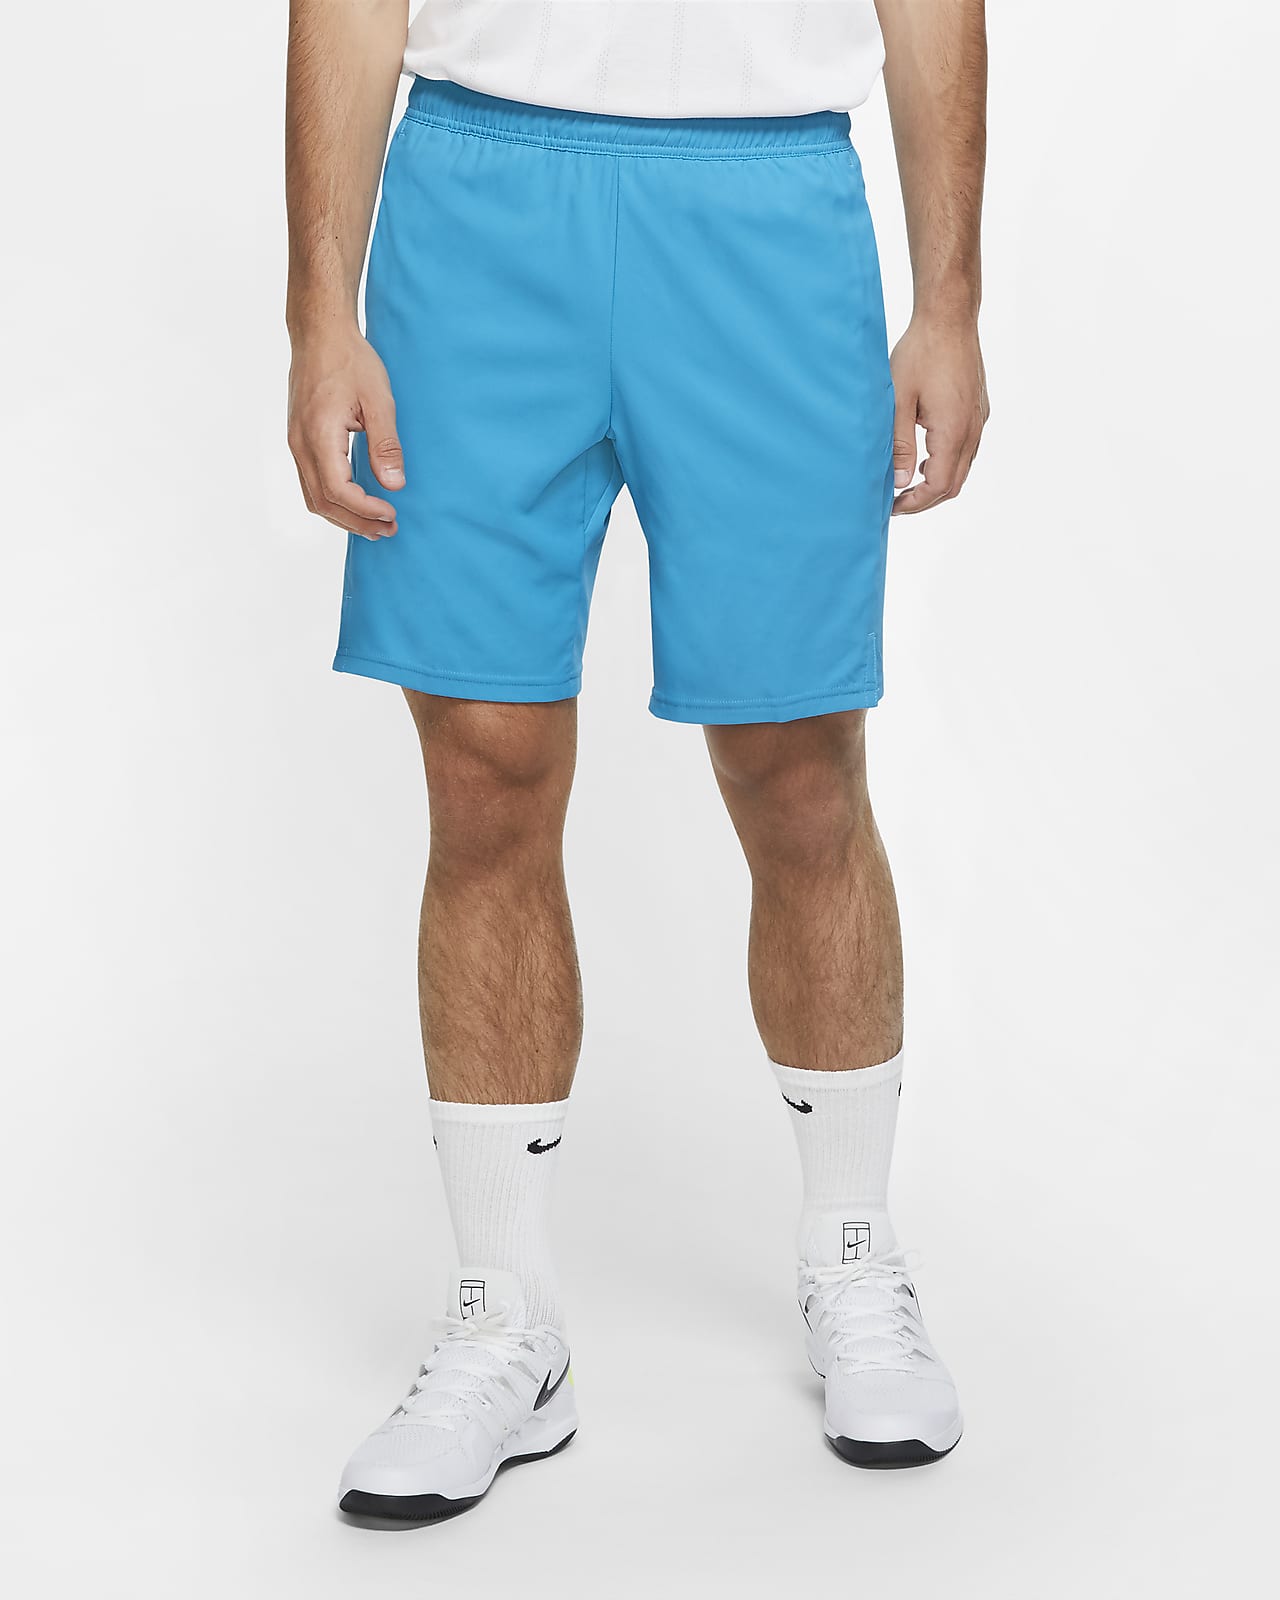 nike tennis shorts mens